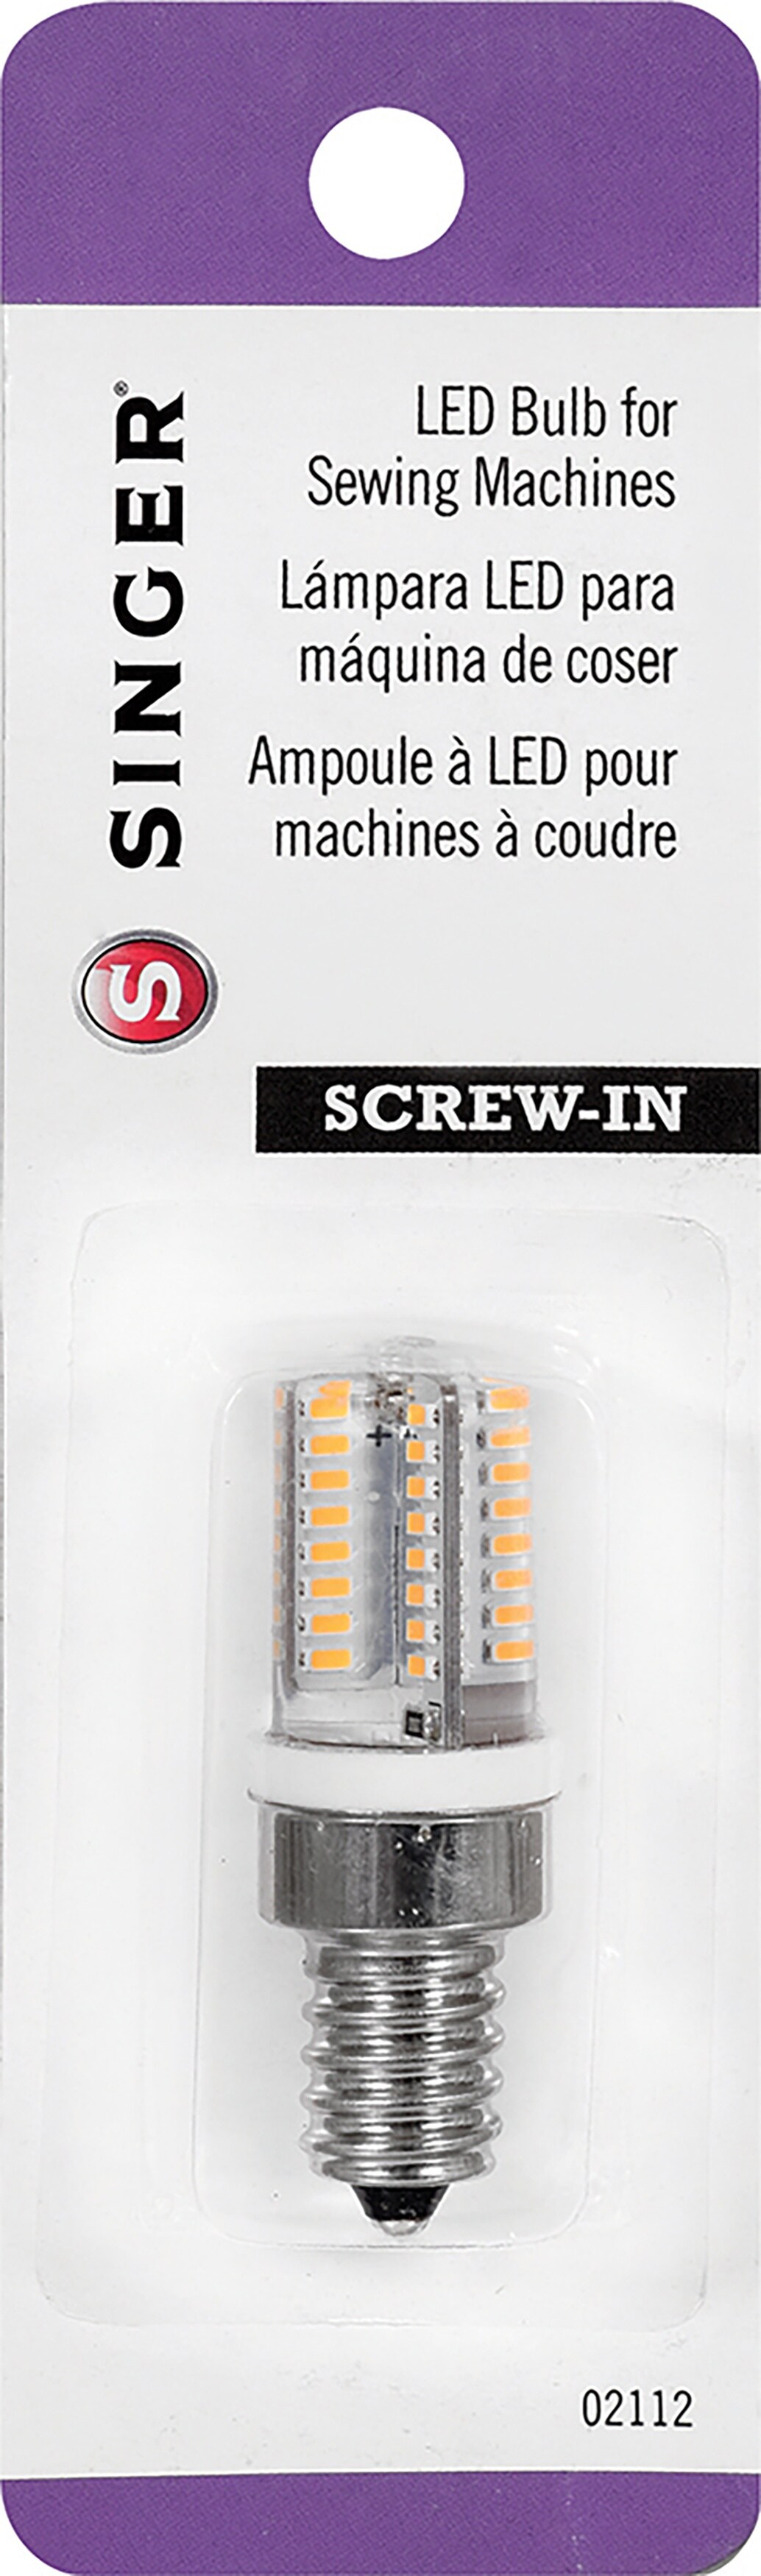 SINGER Sewing Machine LED Screw-In Light Bulb-